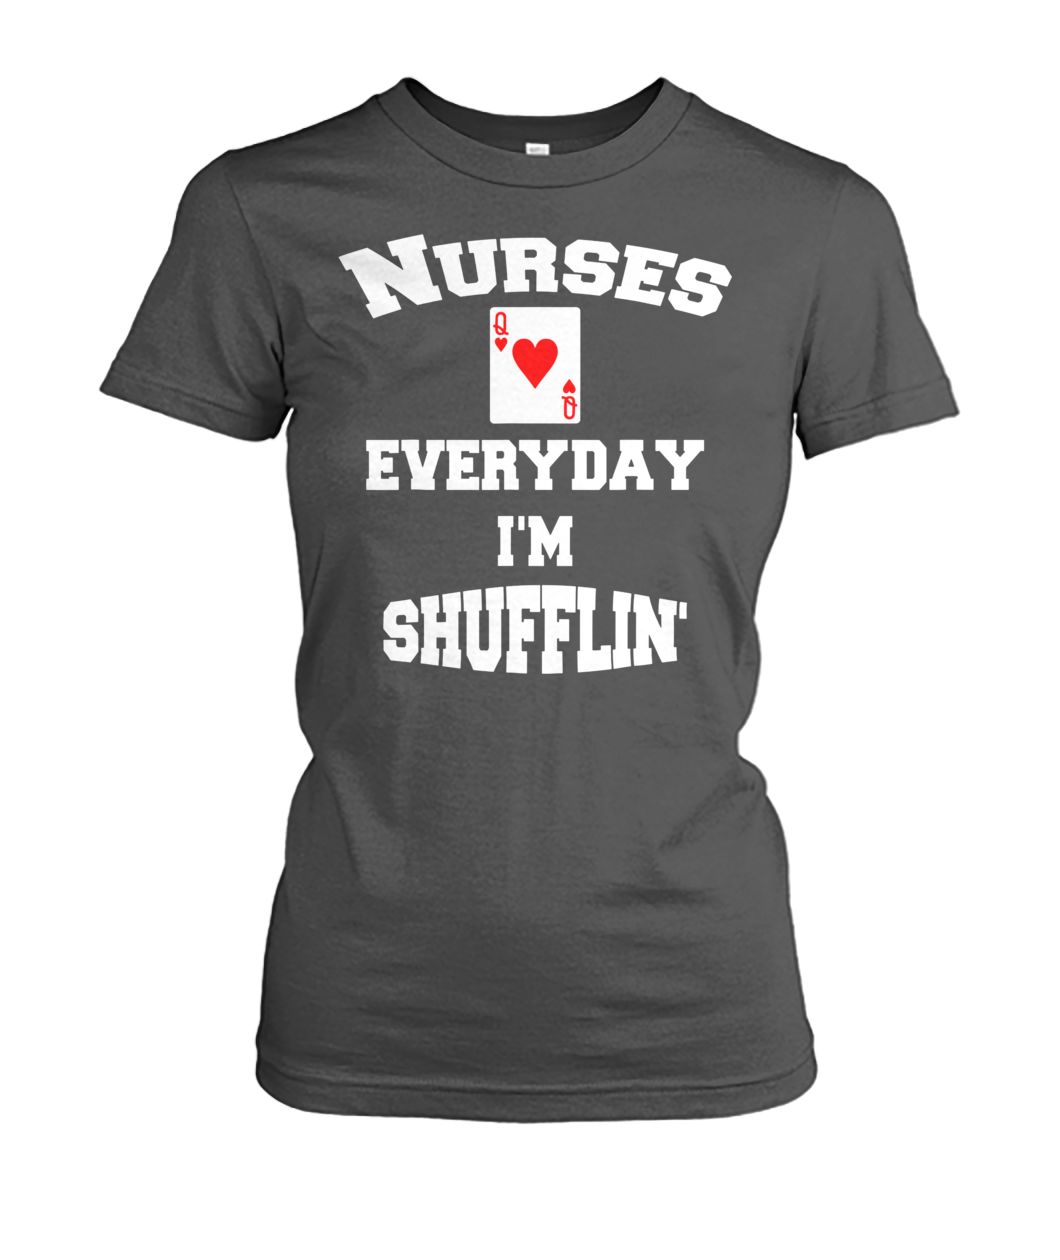 Nurse playing cards nurses everyday I'm shufflin women's crew tee